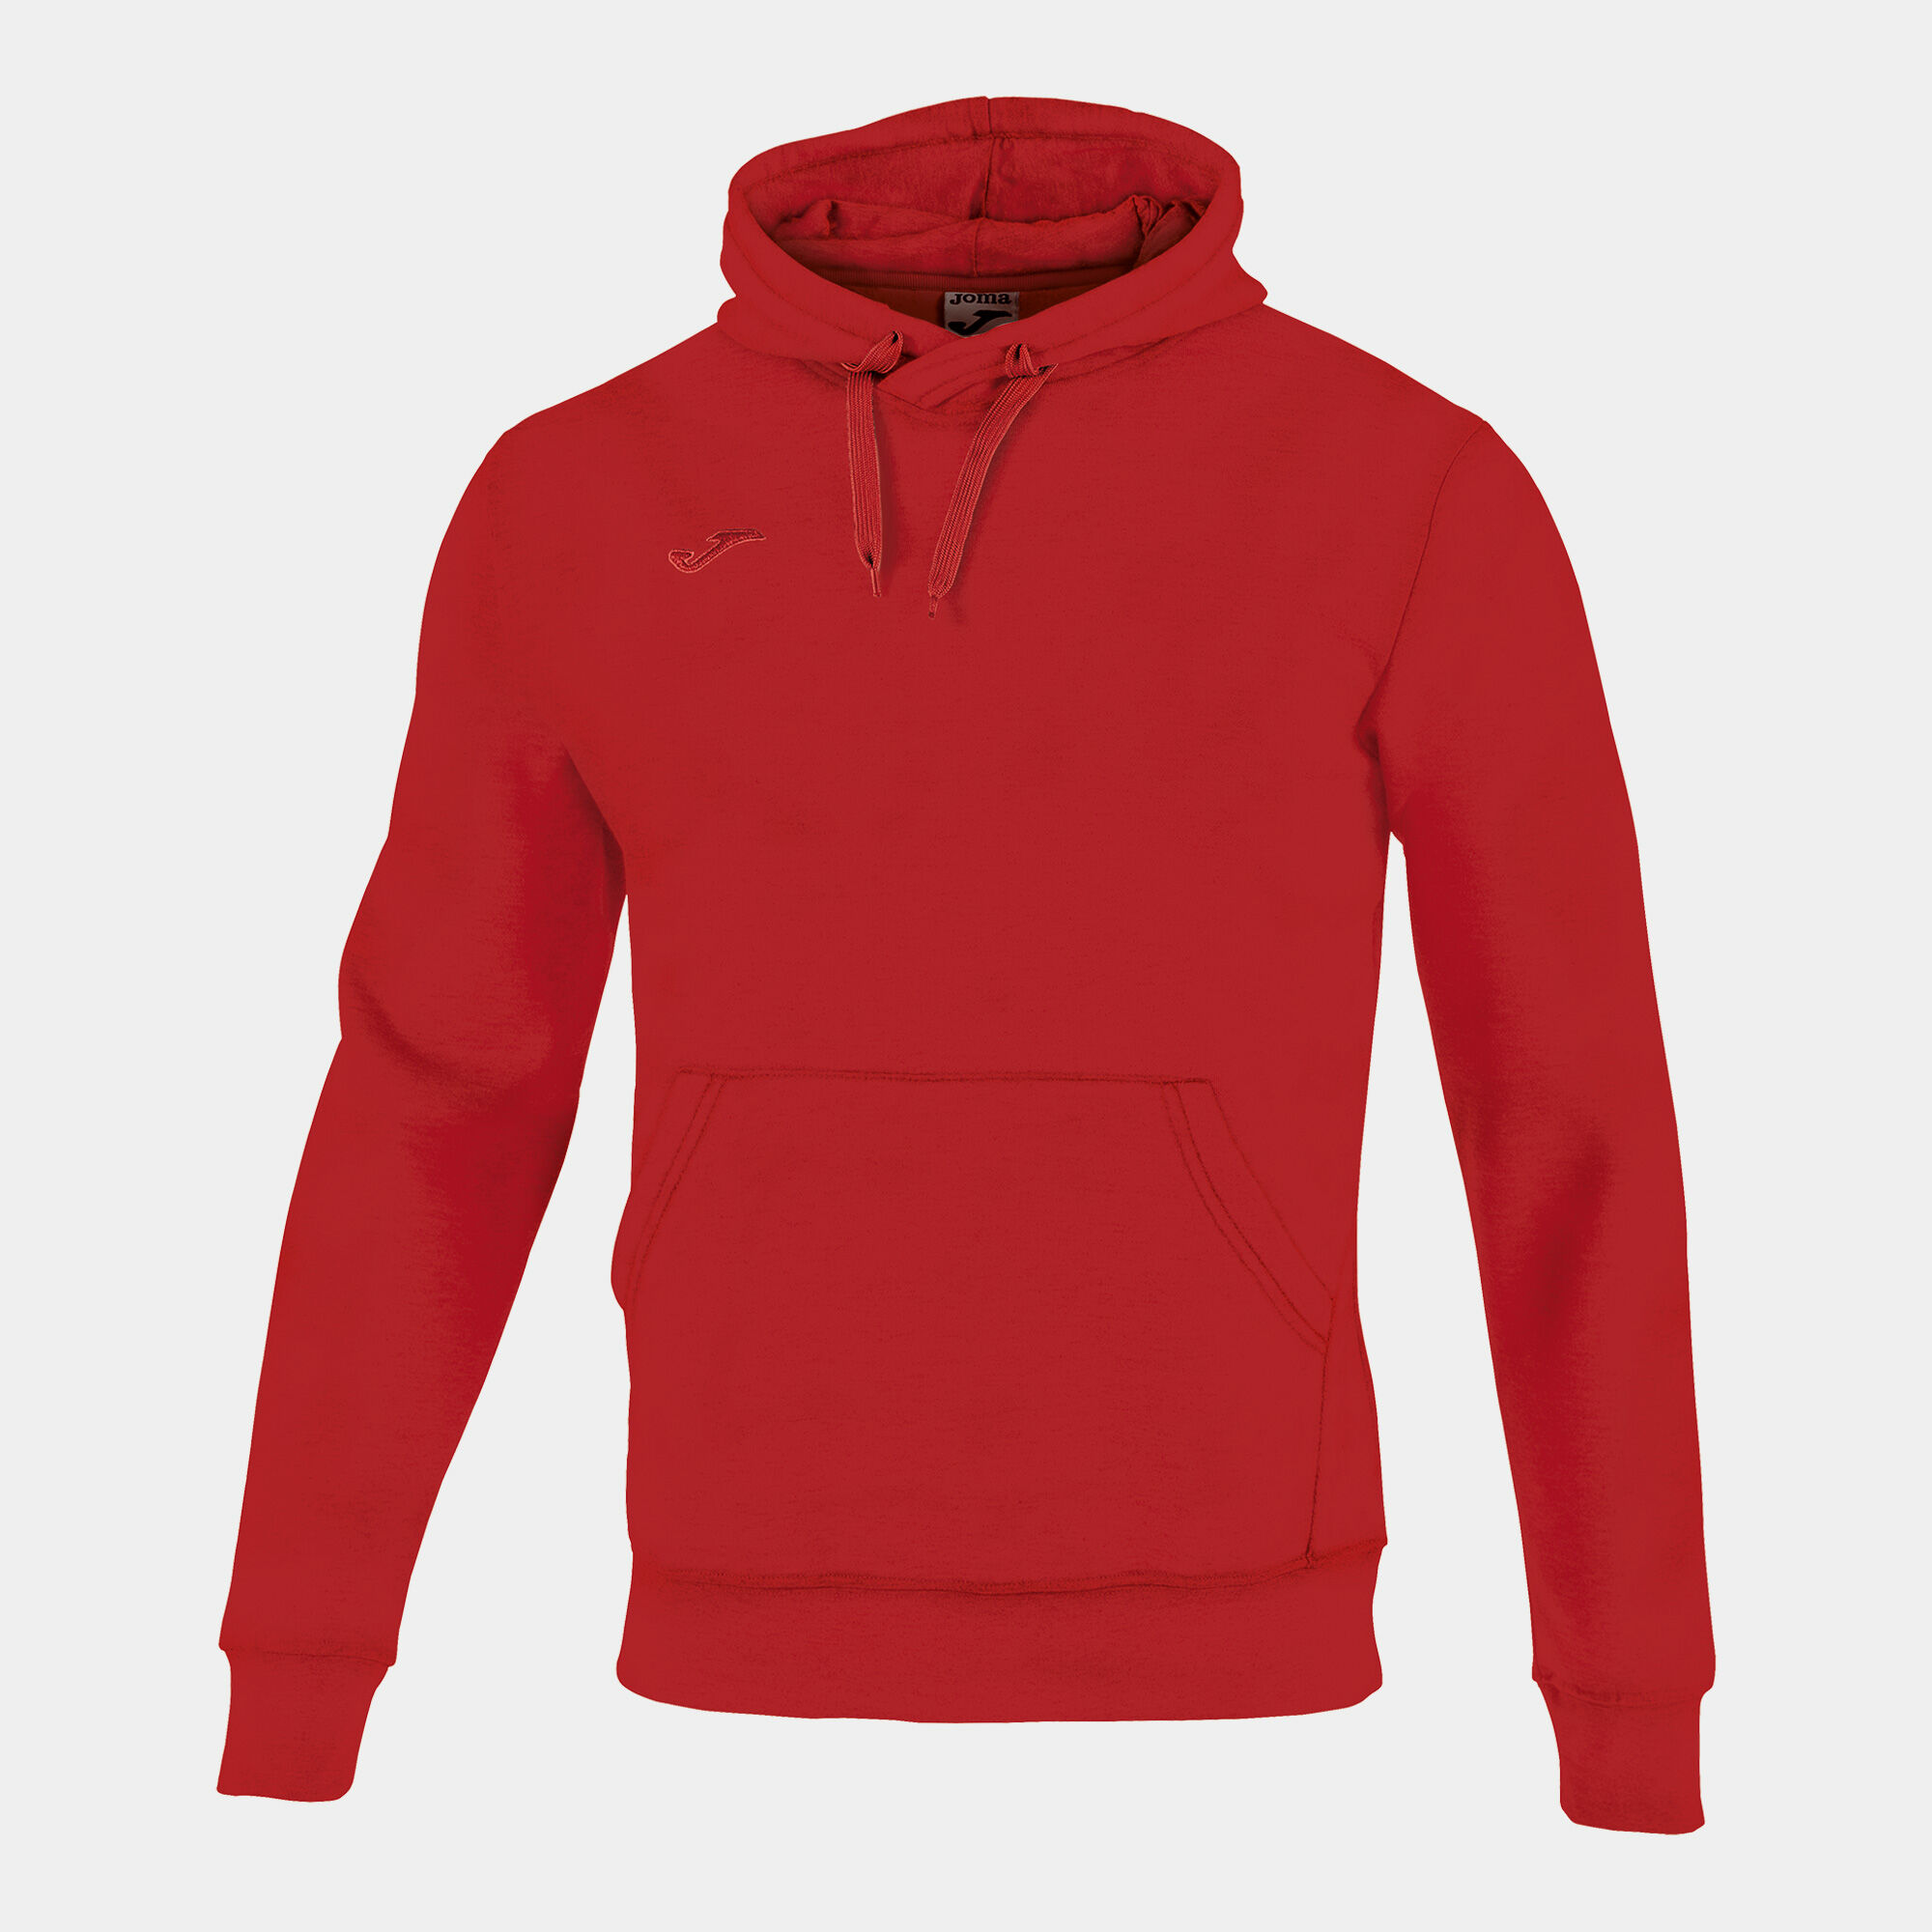 Hooded sweater man Atenas II red